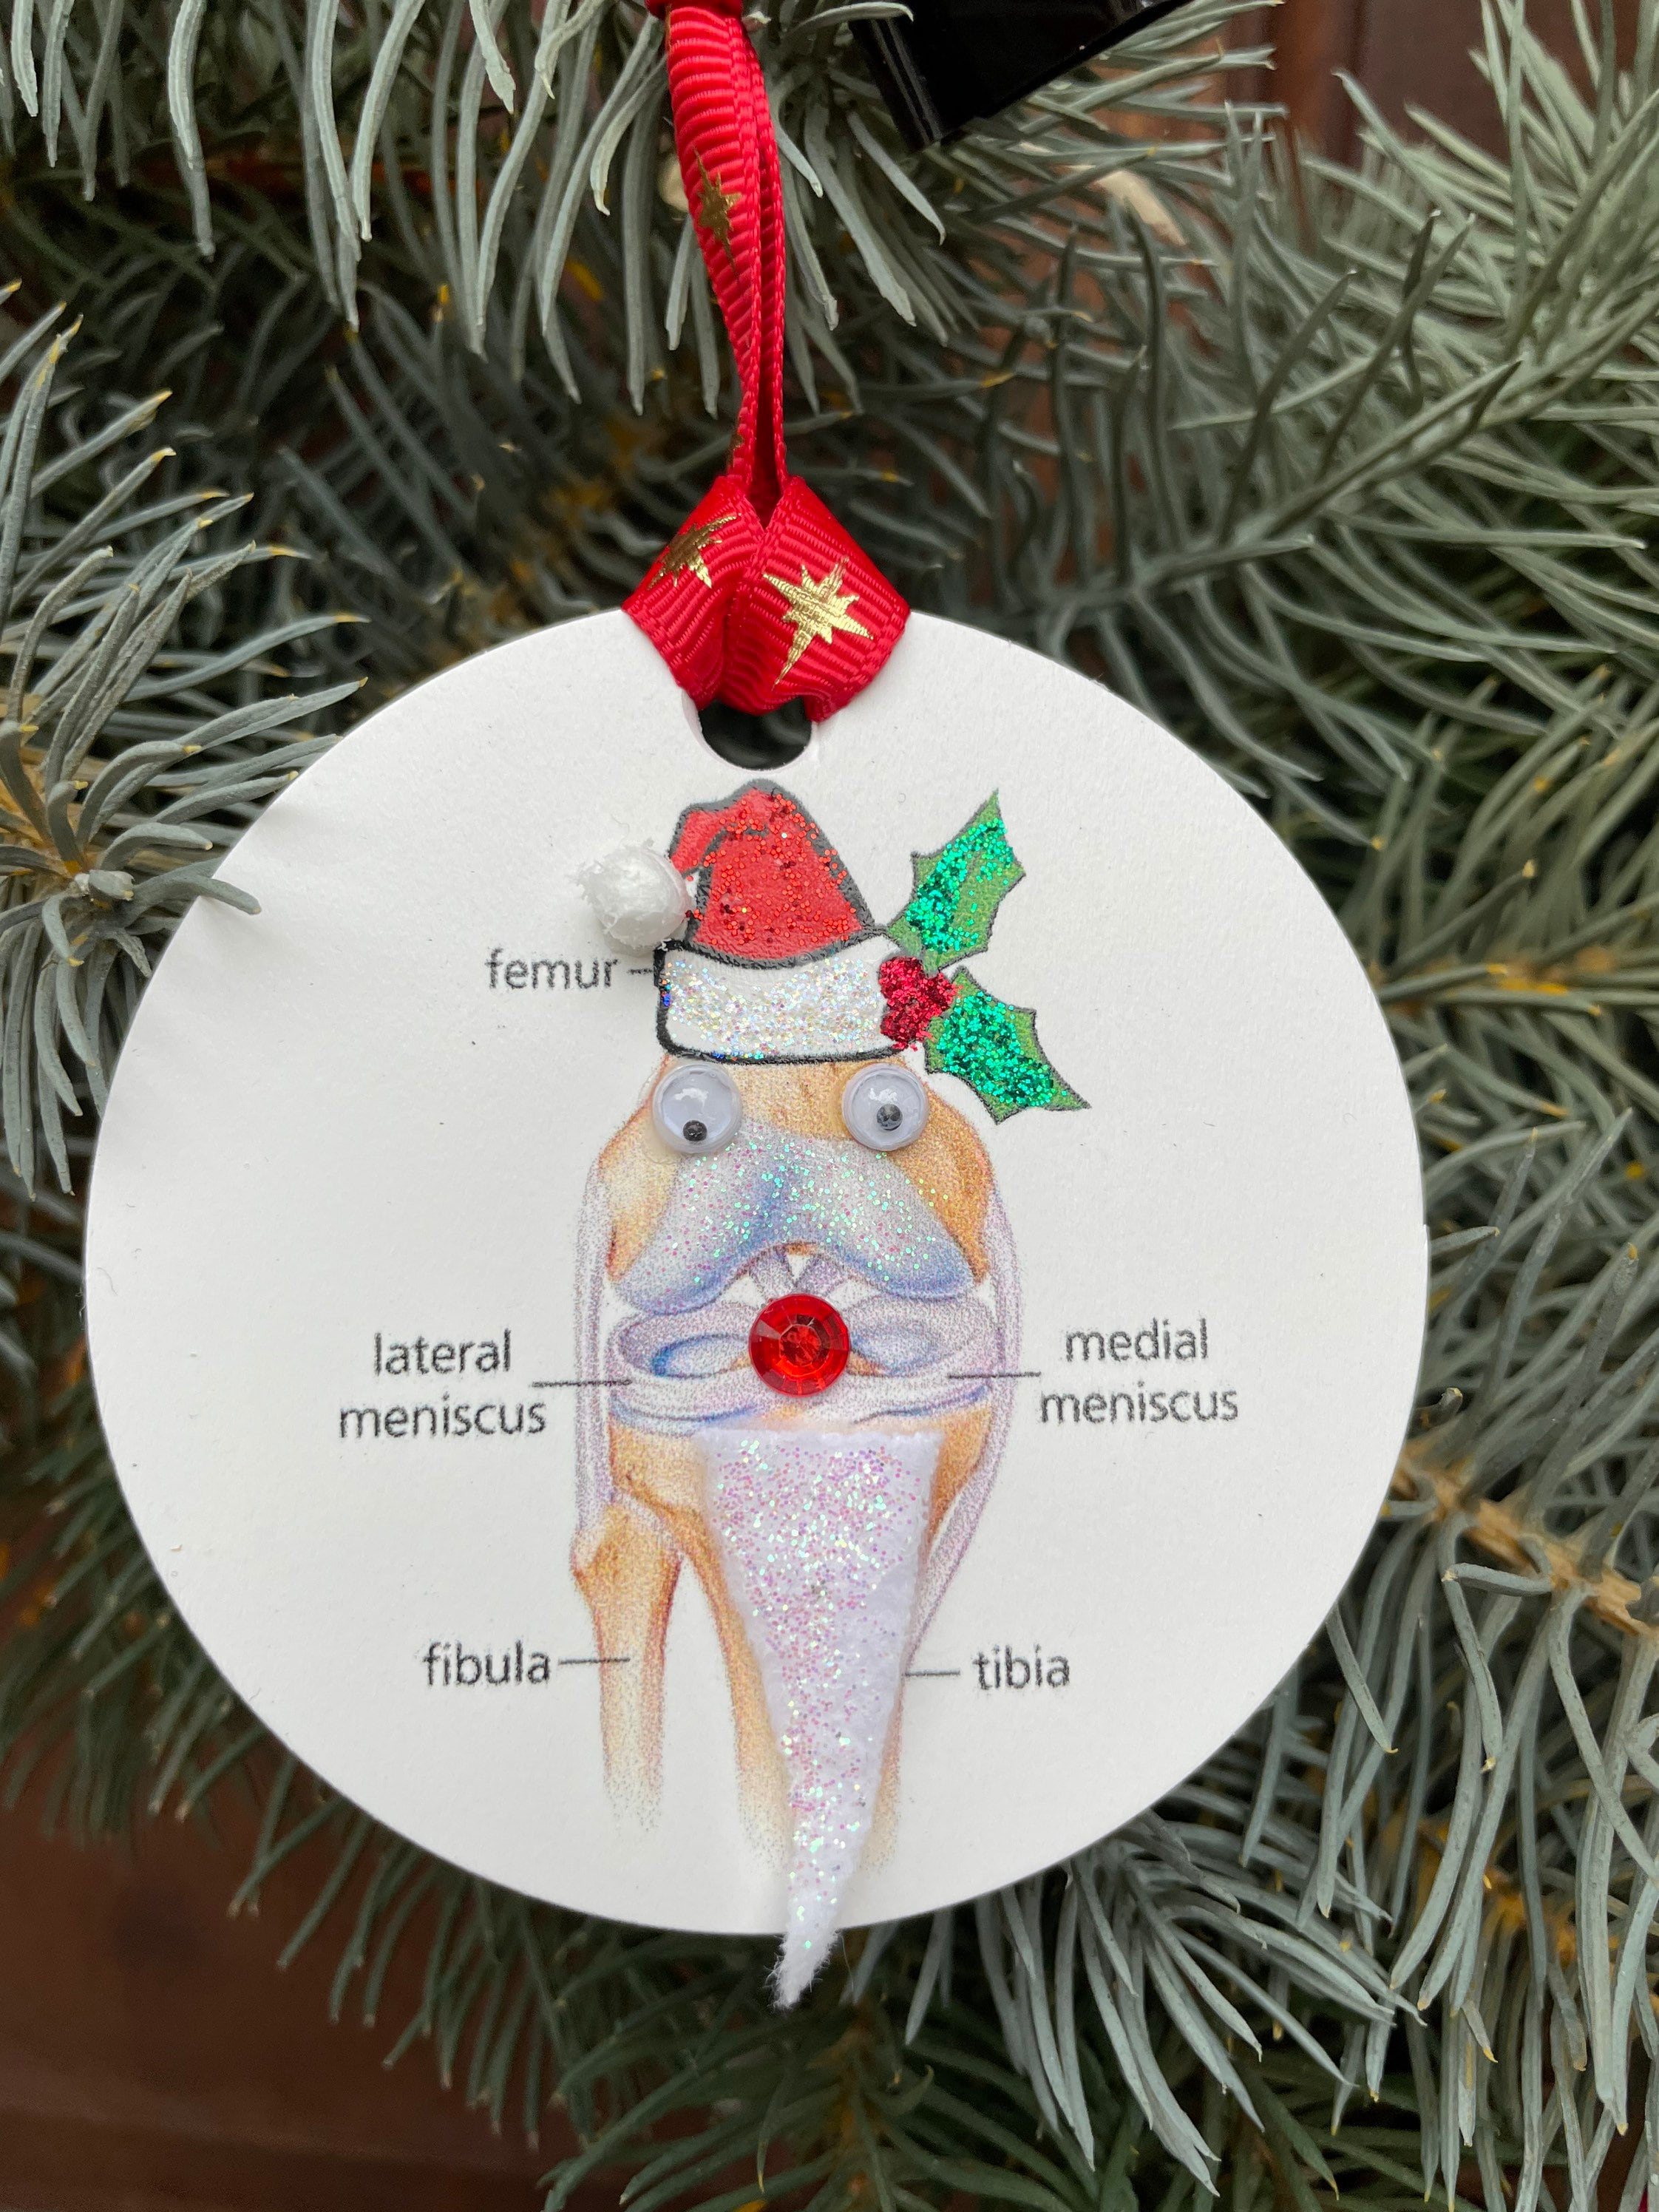 amateur surgeon christmas edition reindeer Sex Images Hq